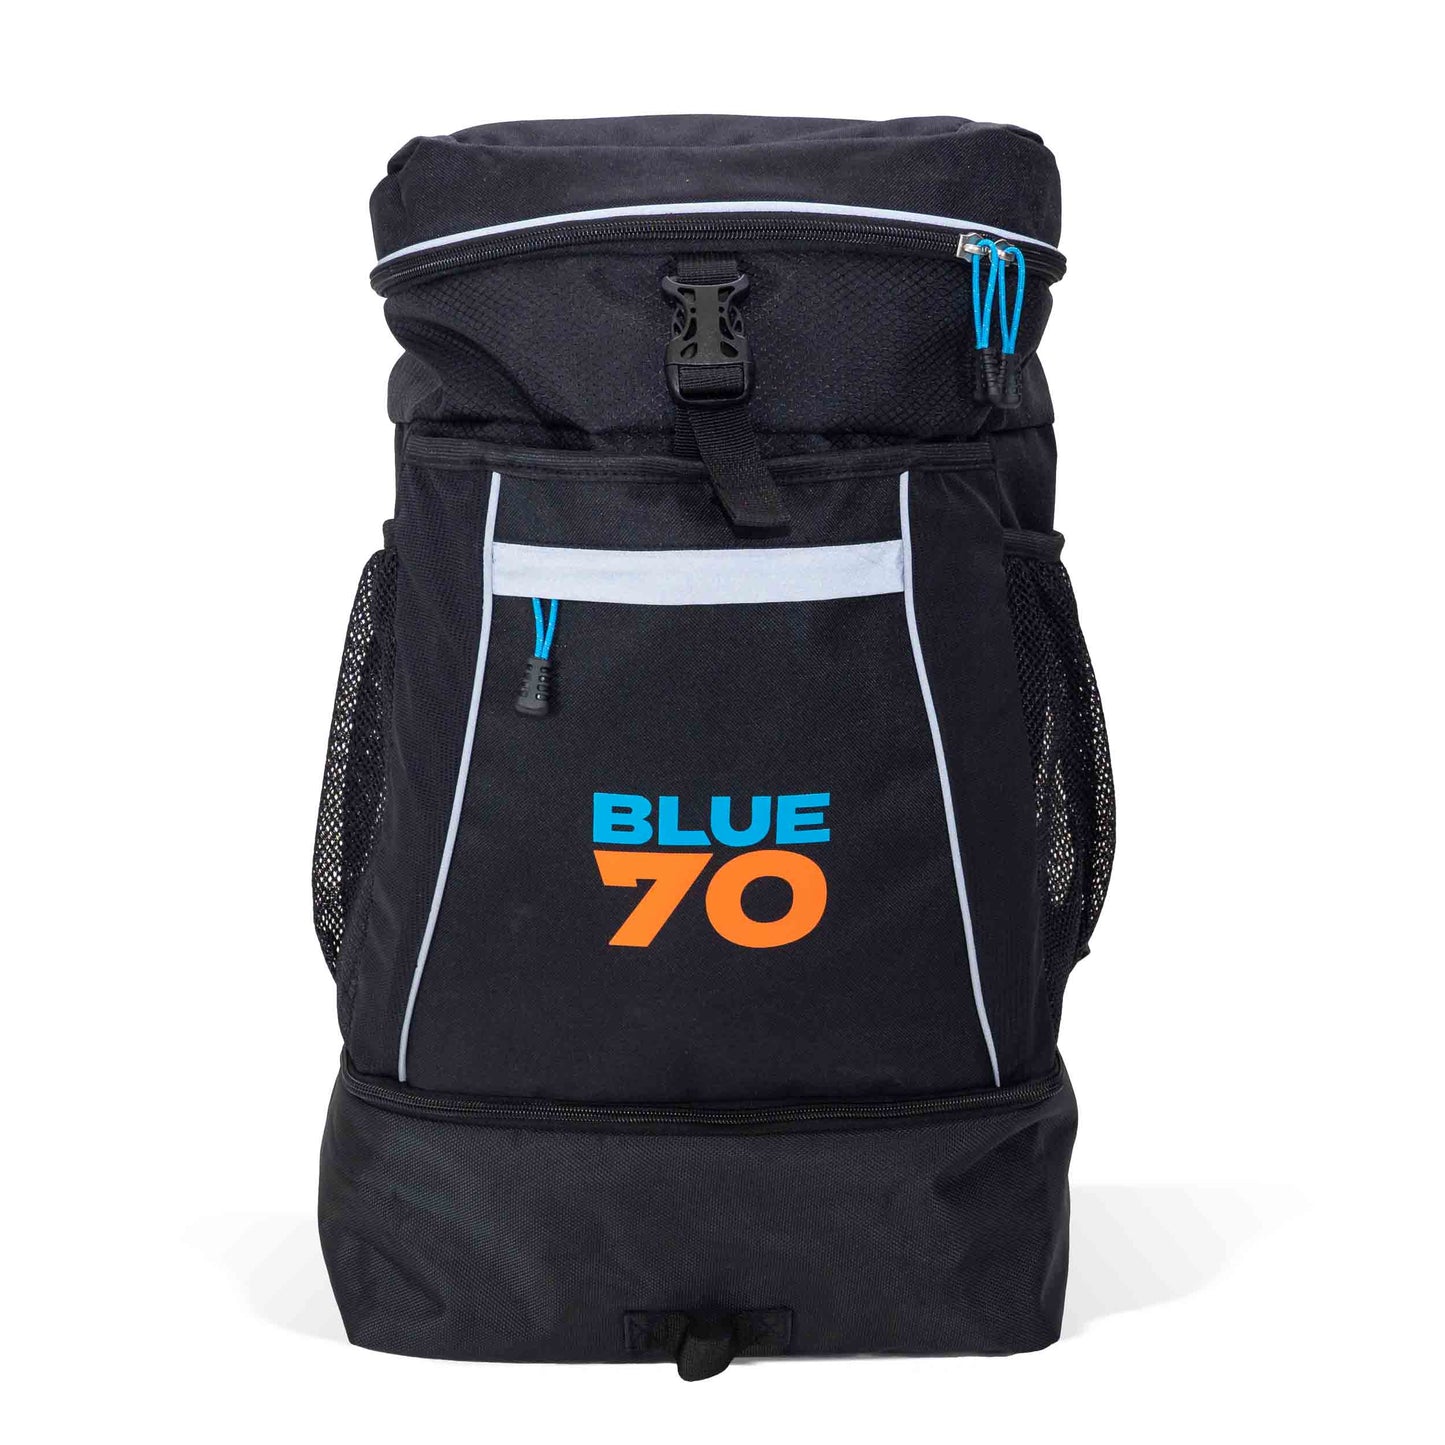 Transition Bag - the Original Backpack | blueseventy – Blueseventy usa